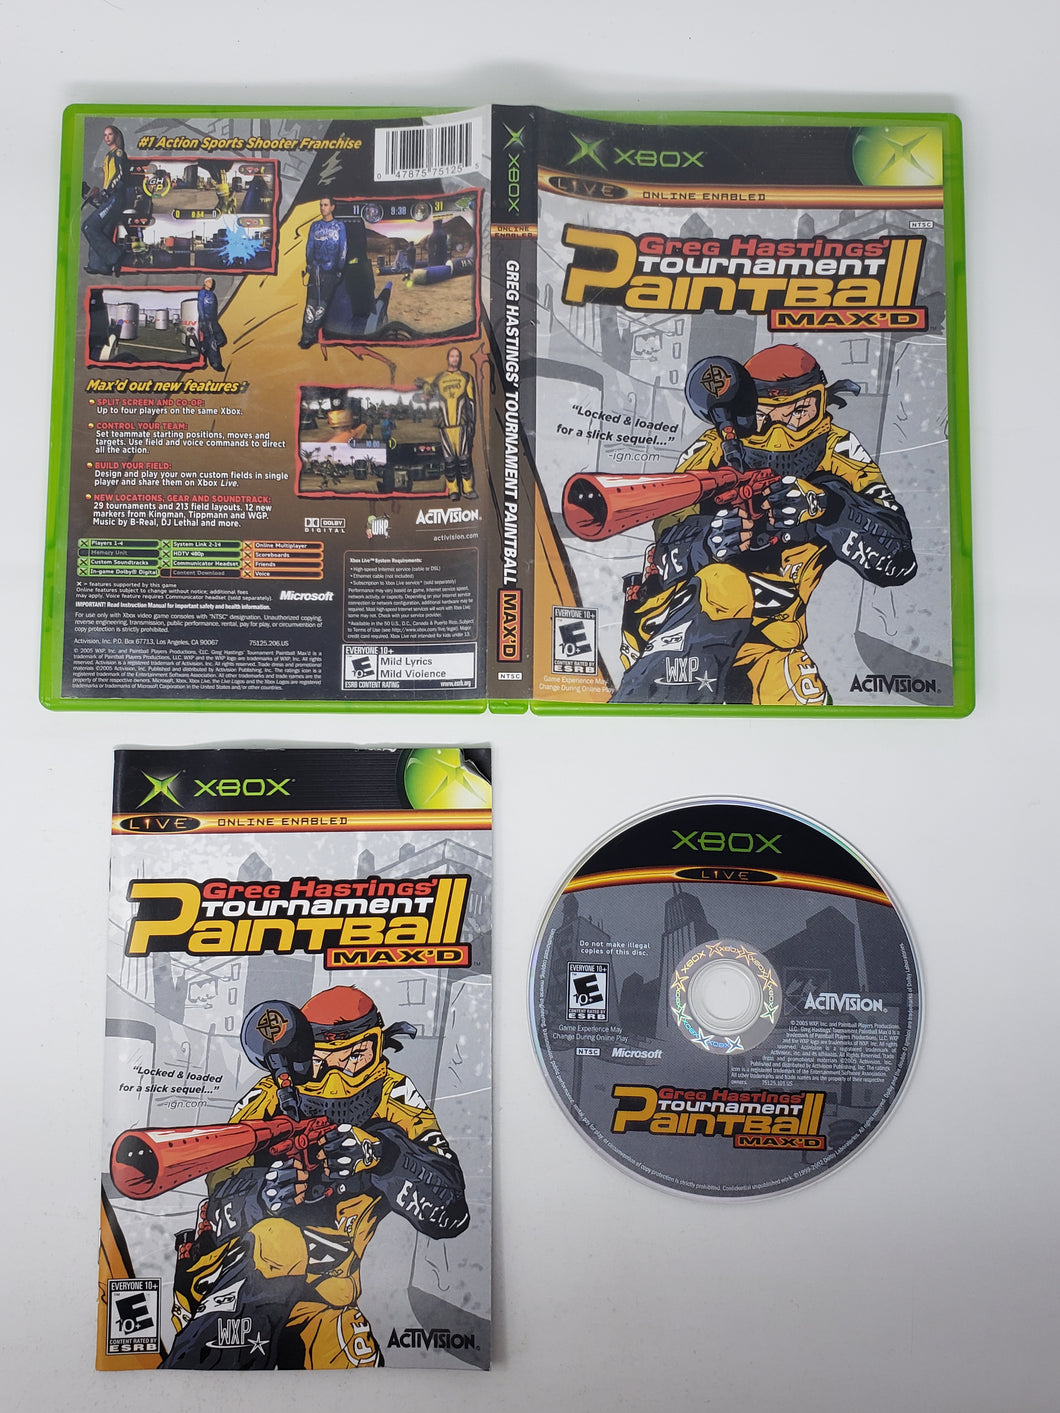 Greg Hastings Tournament Paintball Maxed - Microsoft Xbox